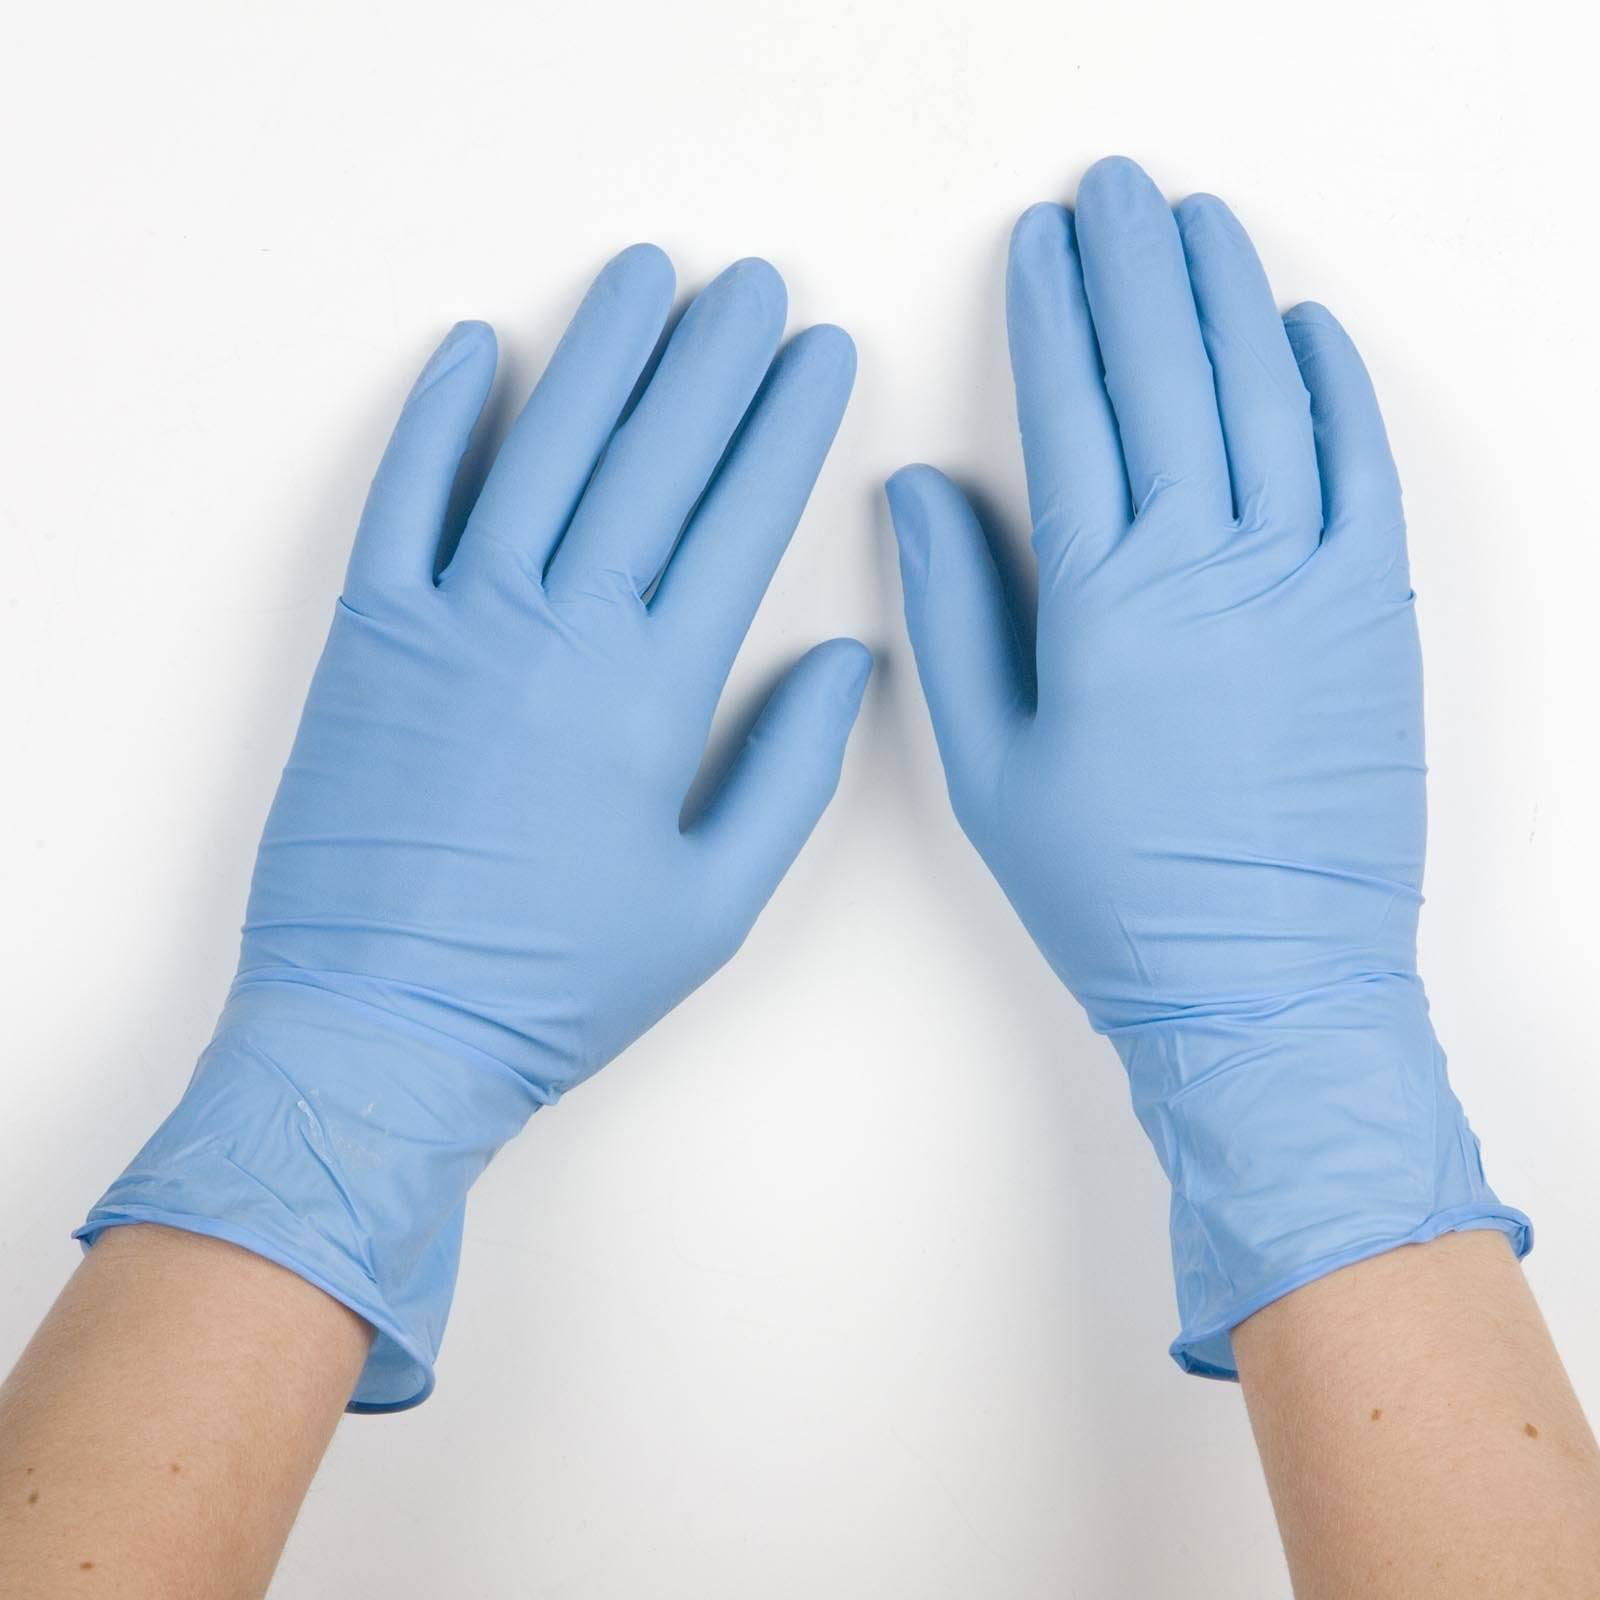 Руки в перчатках медицинских. Перчатки Stayer 11409-h10. Armprote ст 6101 10 перчатки. Резиновые перчатки медицинские. Руки в перчатках.